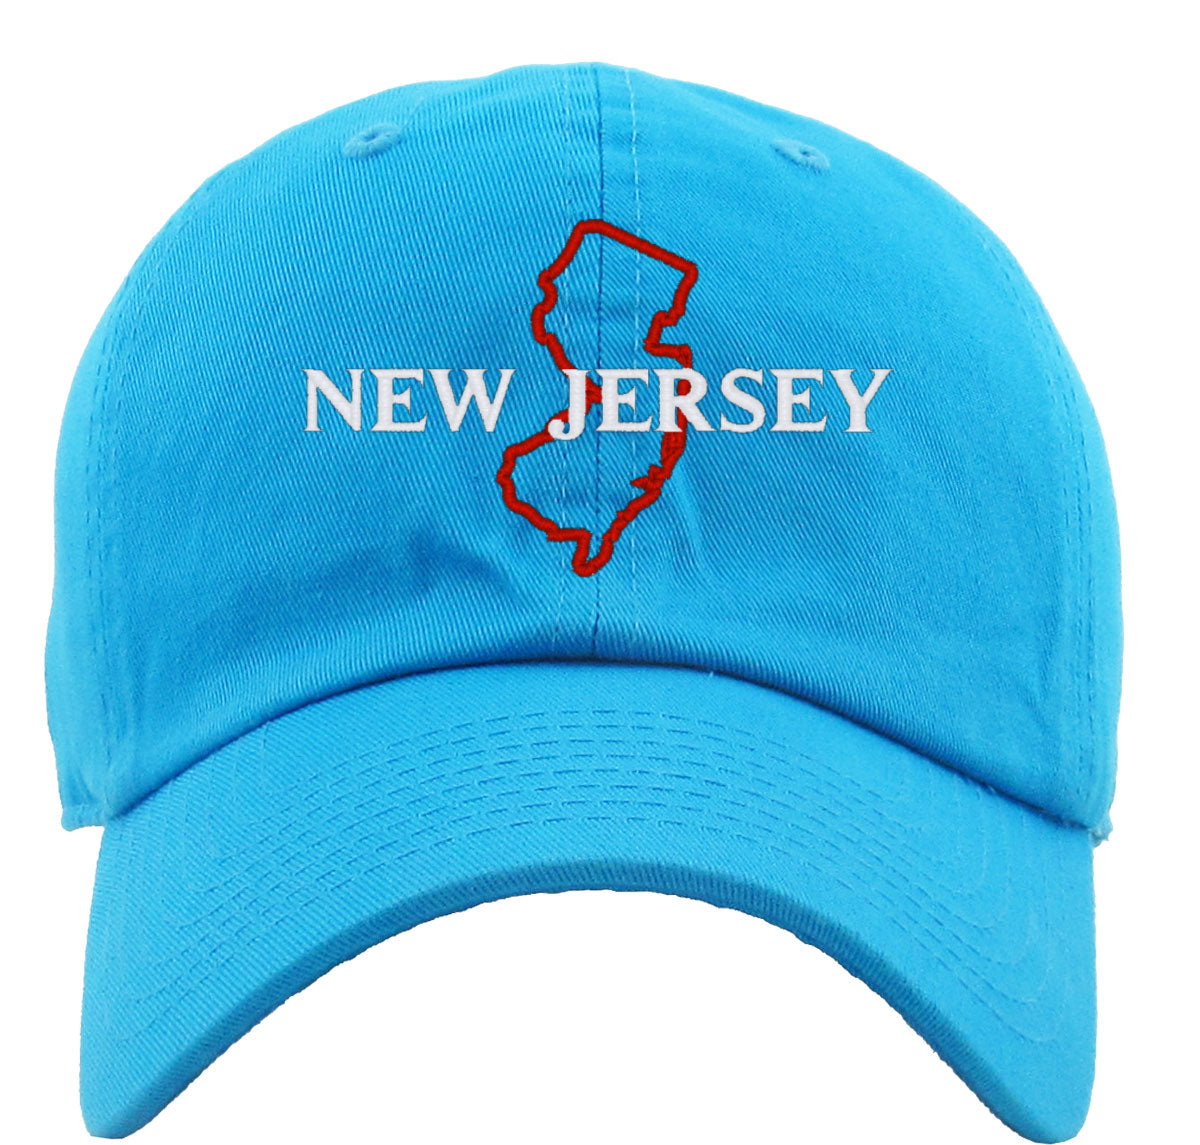 New Jersey Premium Baseball Cap